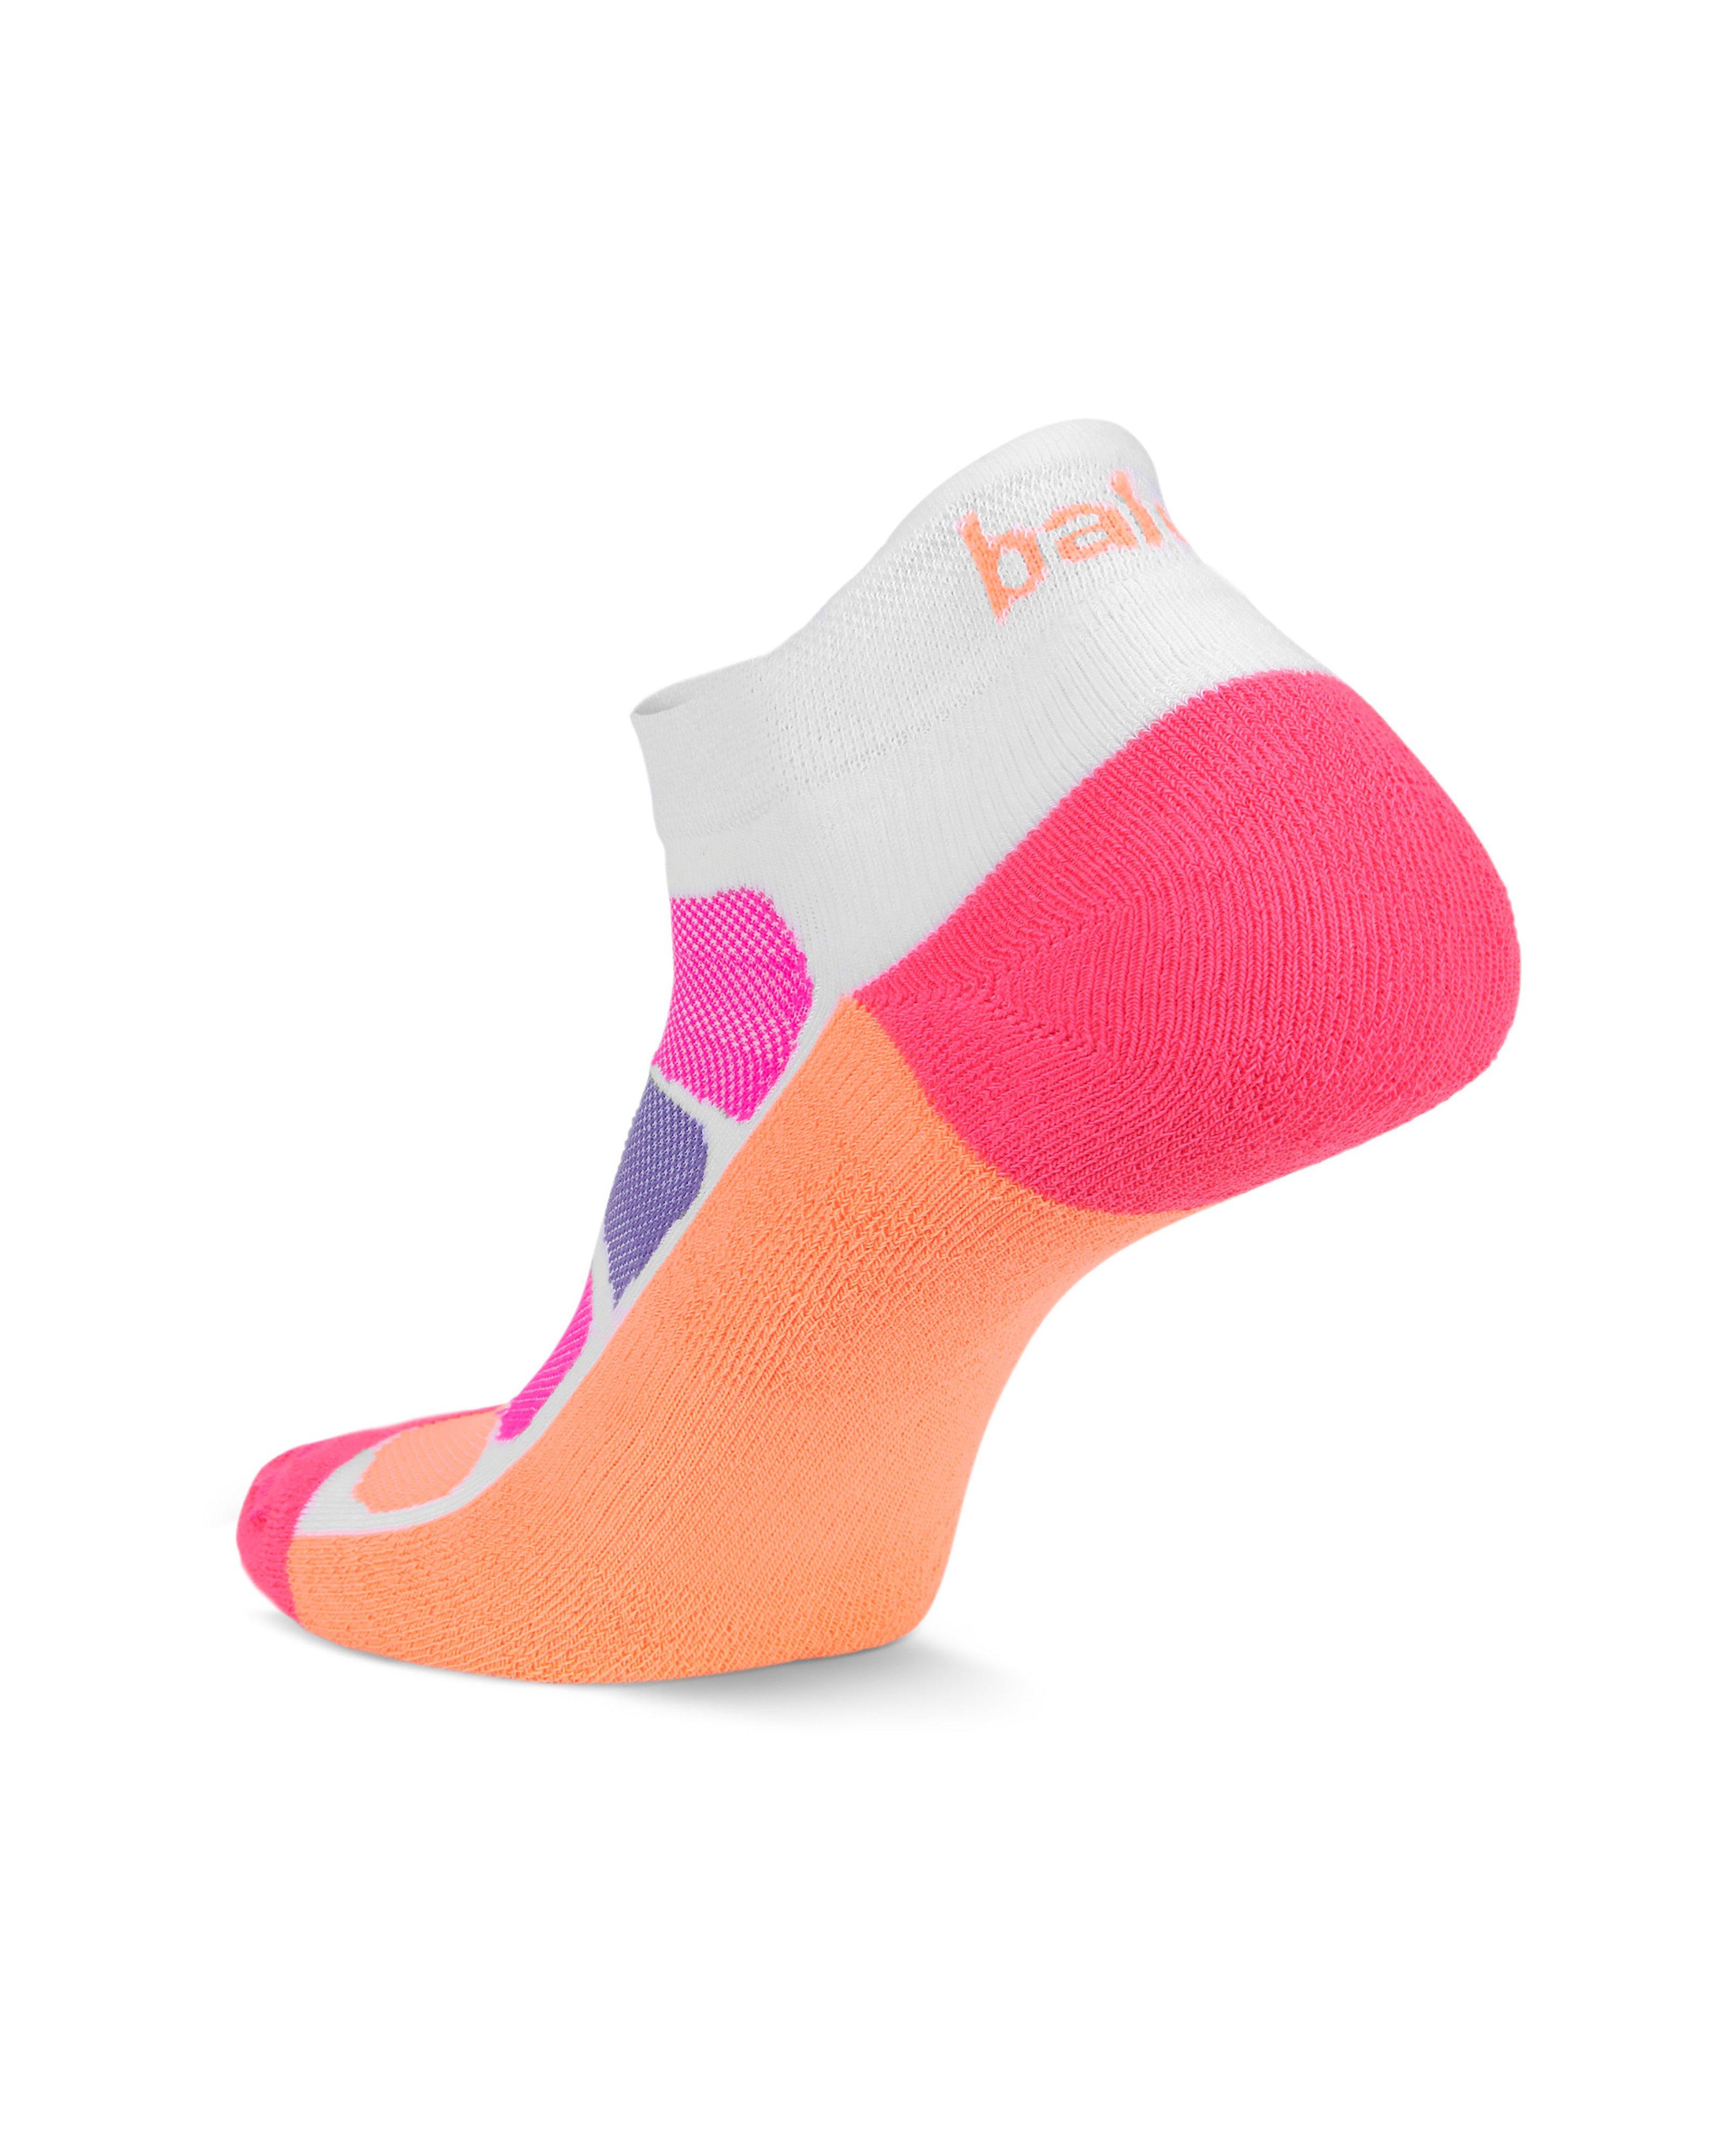 Balega Women's Enduro No-Show Running Socks -  Pink